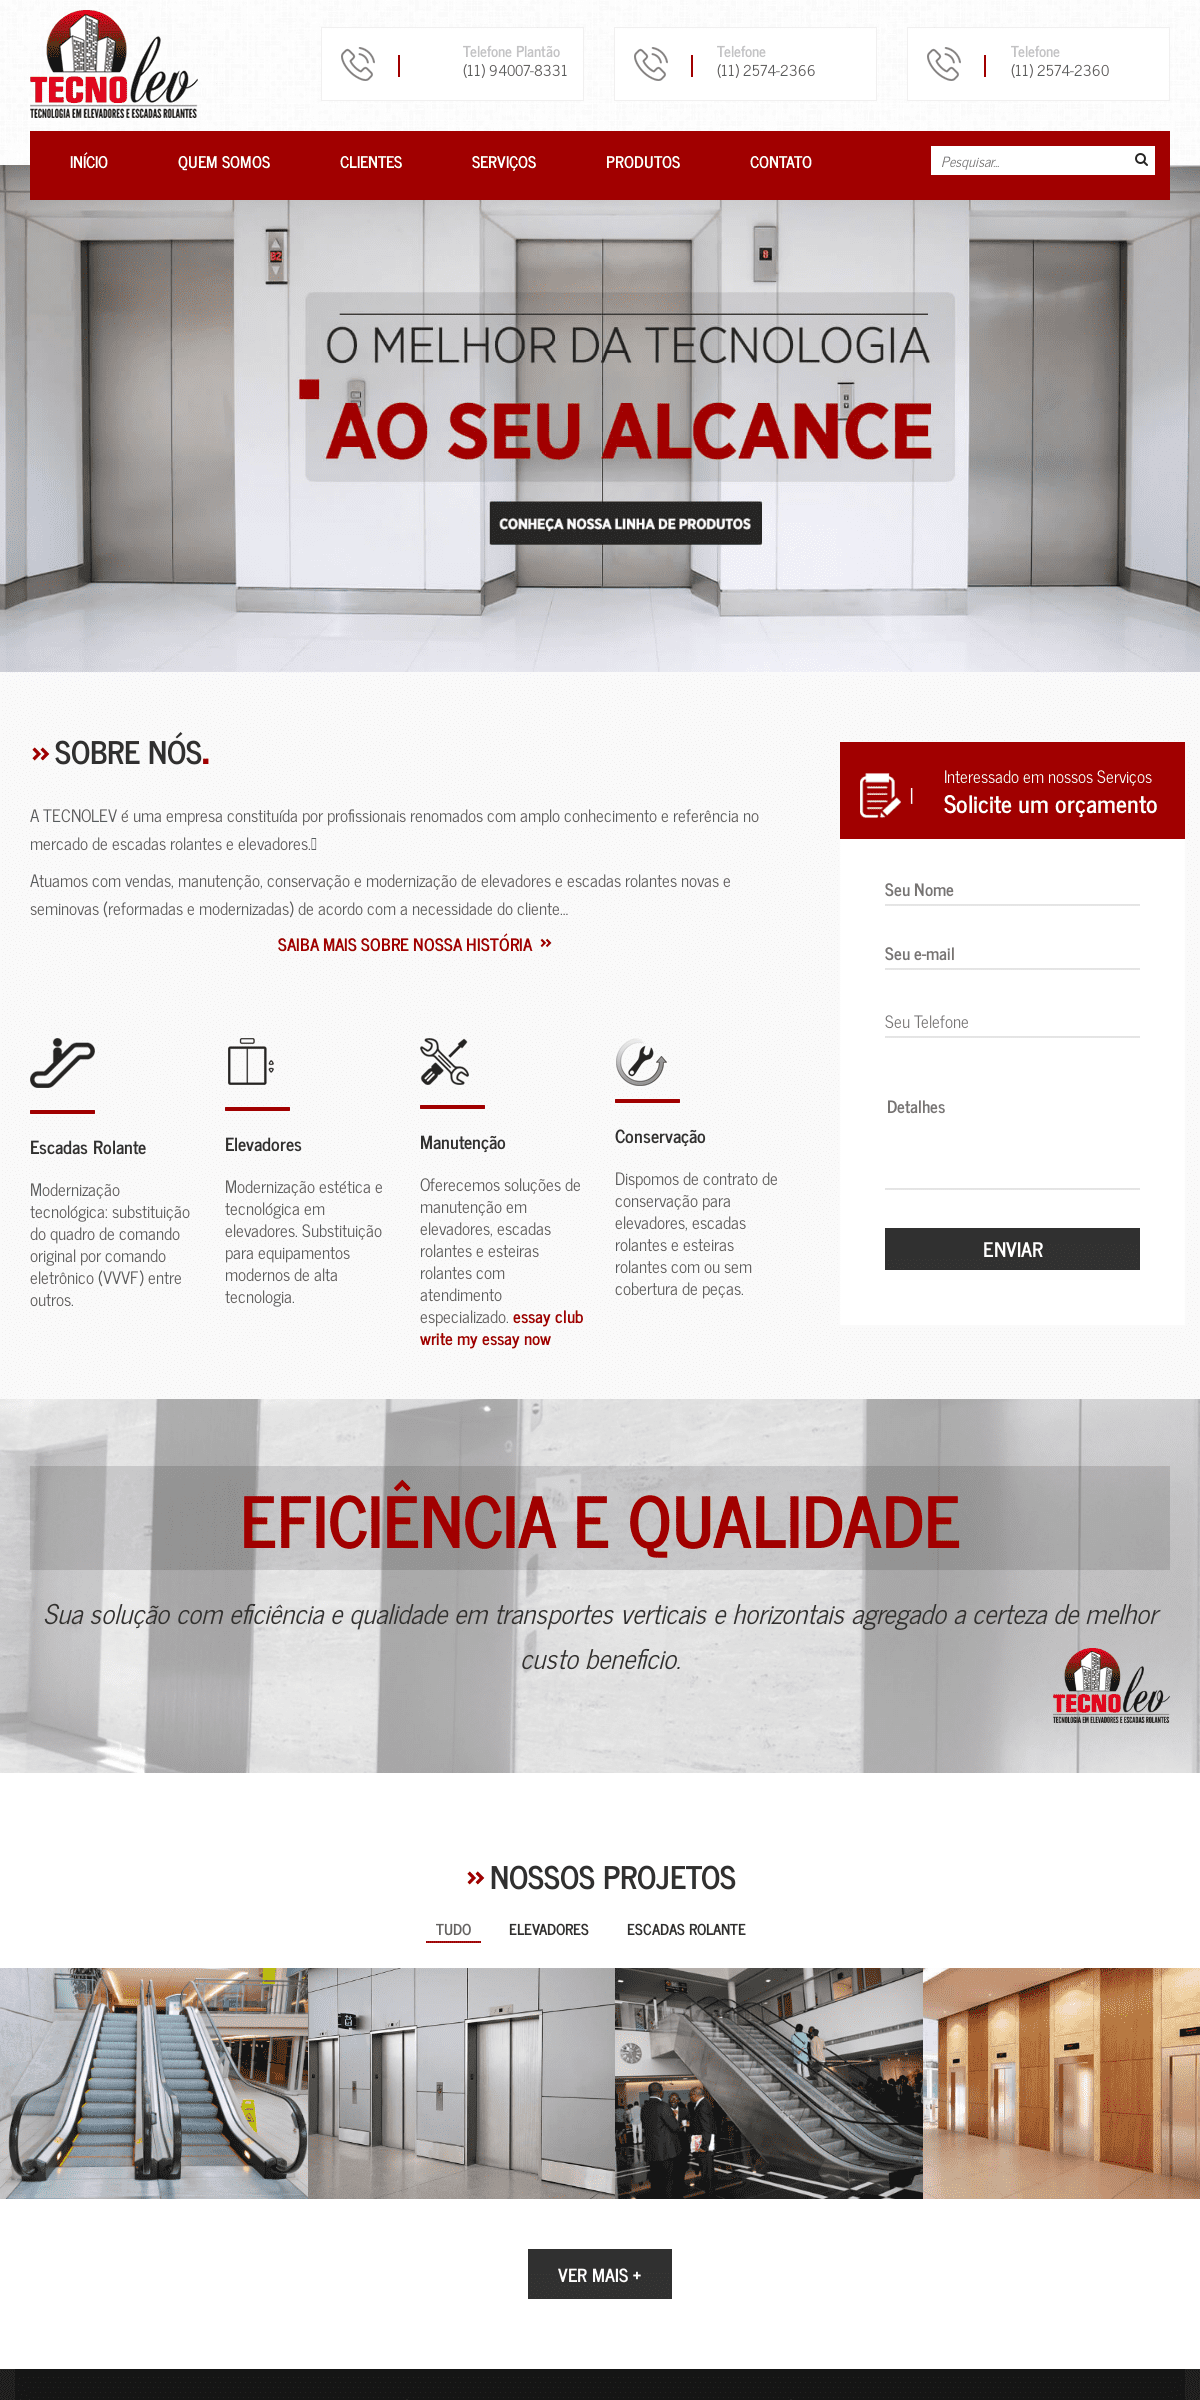 A complete backup of tecnolev.com.br